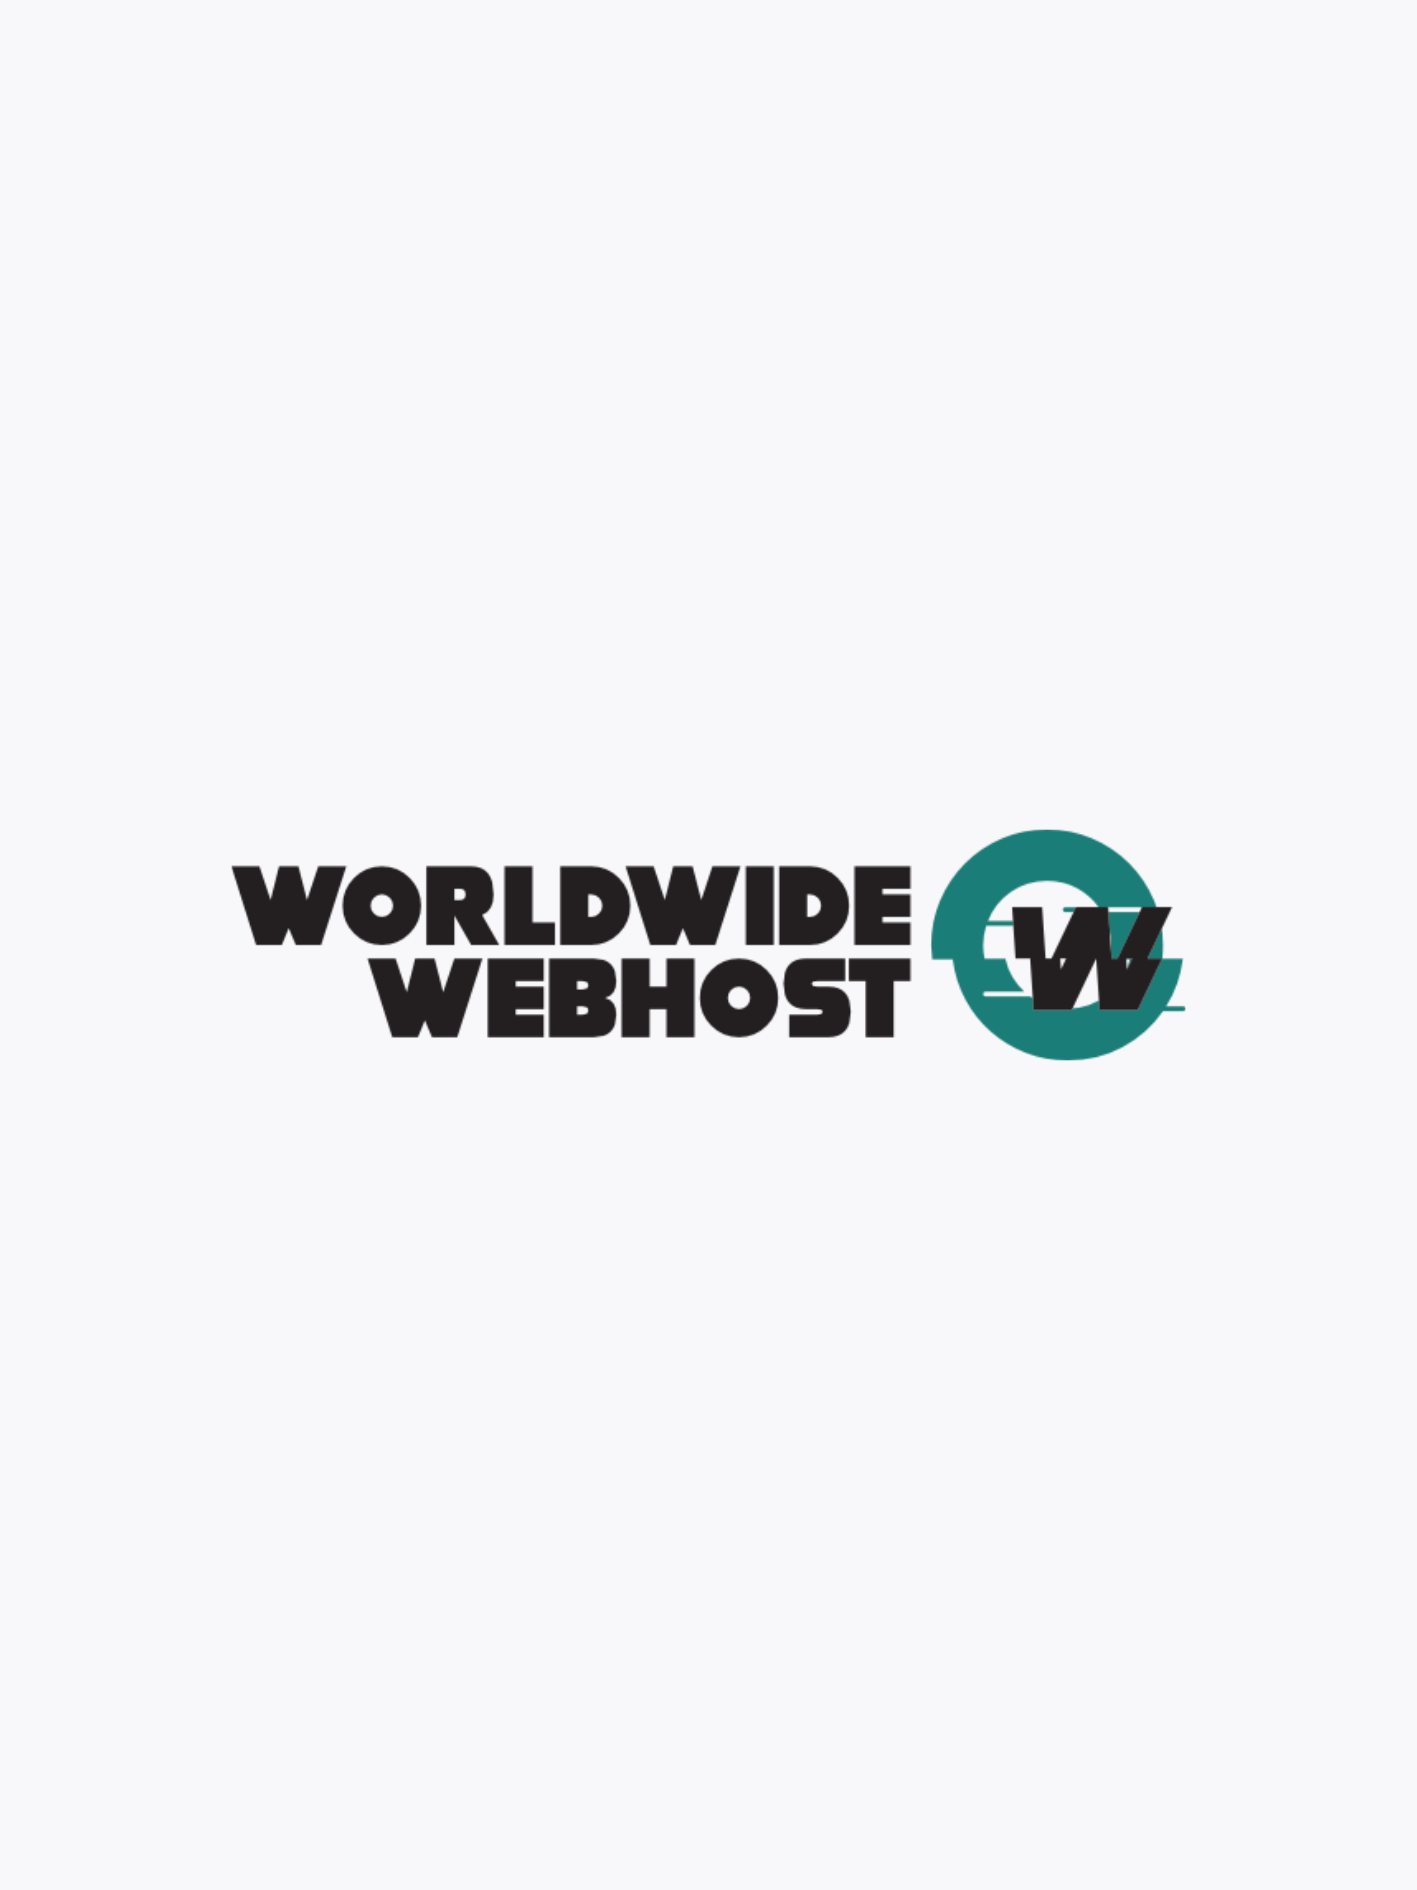 Worldwide Webhost